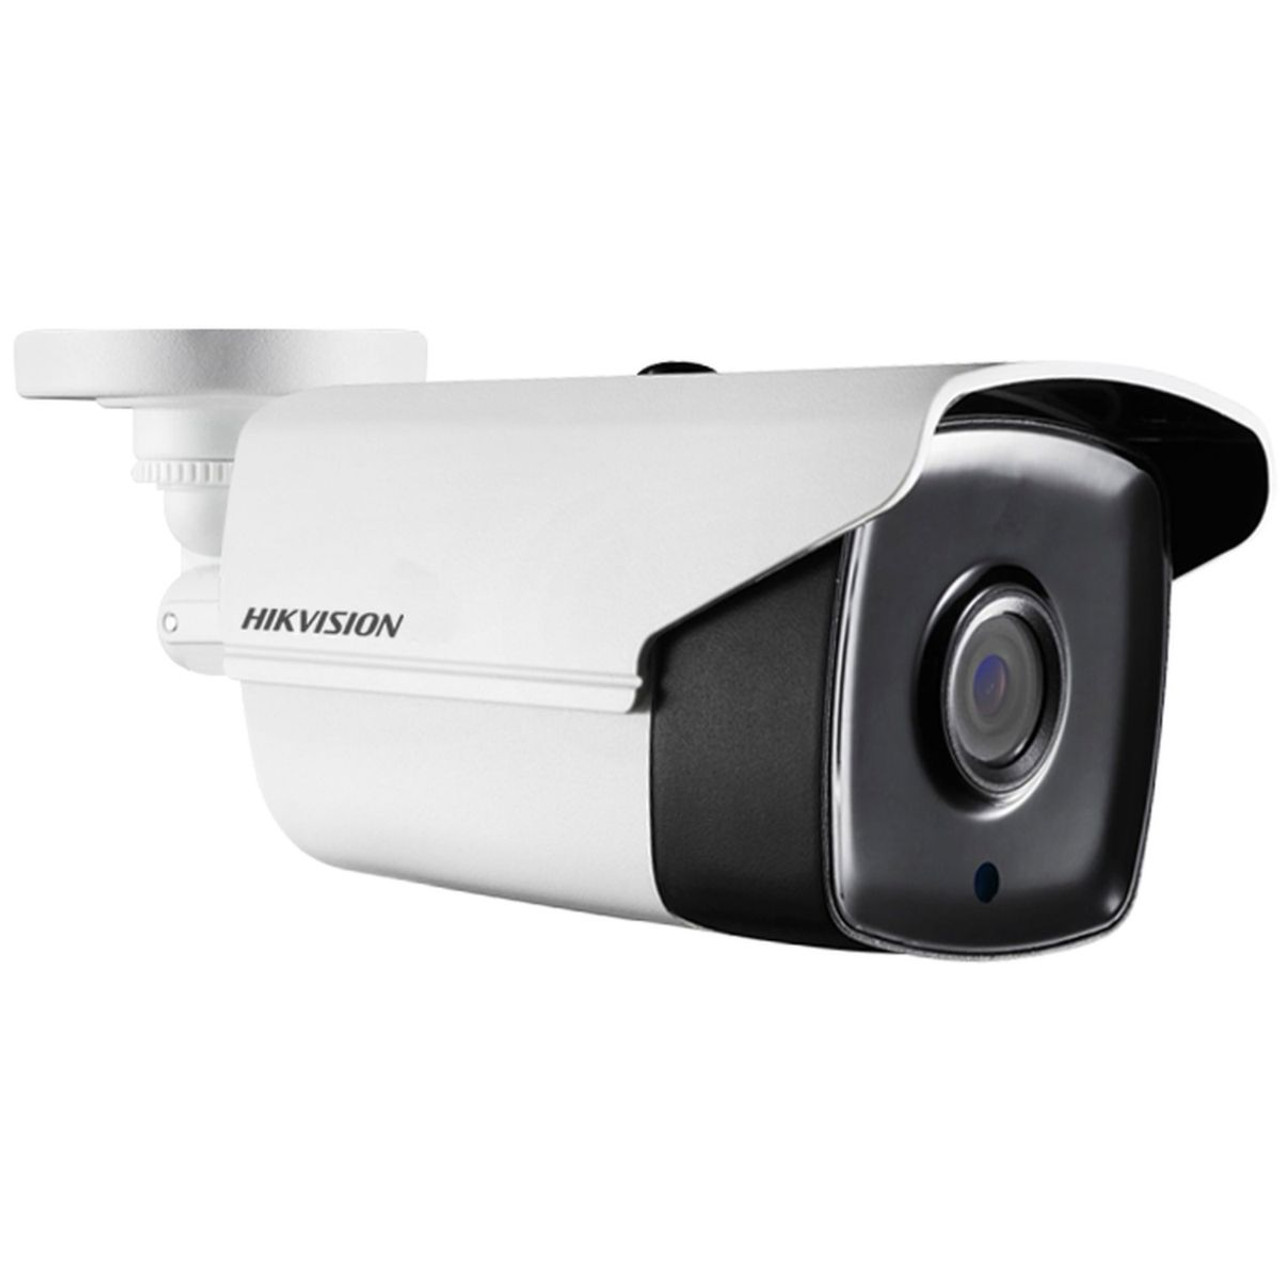 Hikvision 5MP TurboHD EXIR DNR IR 3.6mm urveillance Security Camera product image